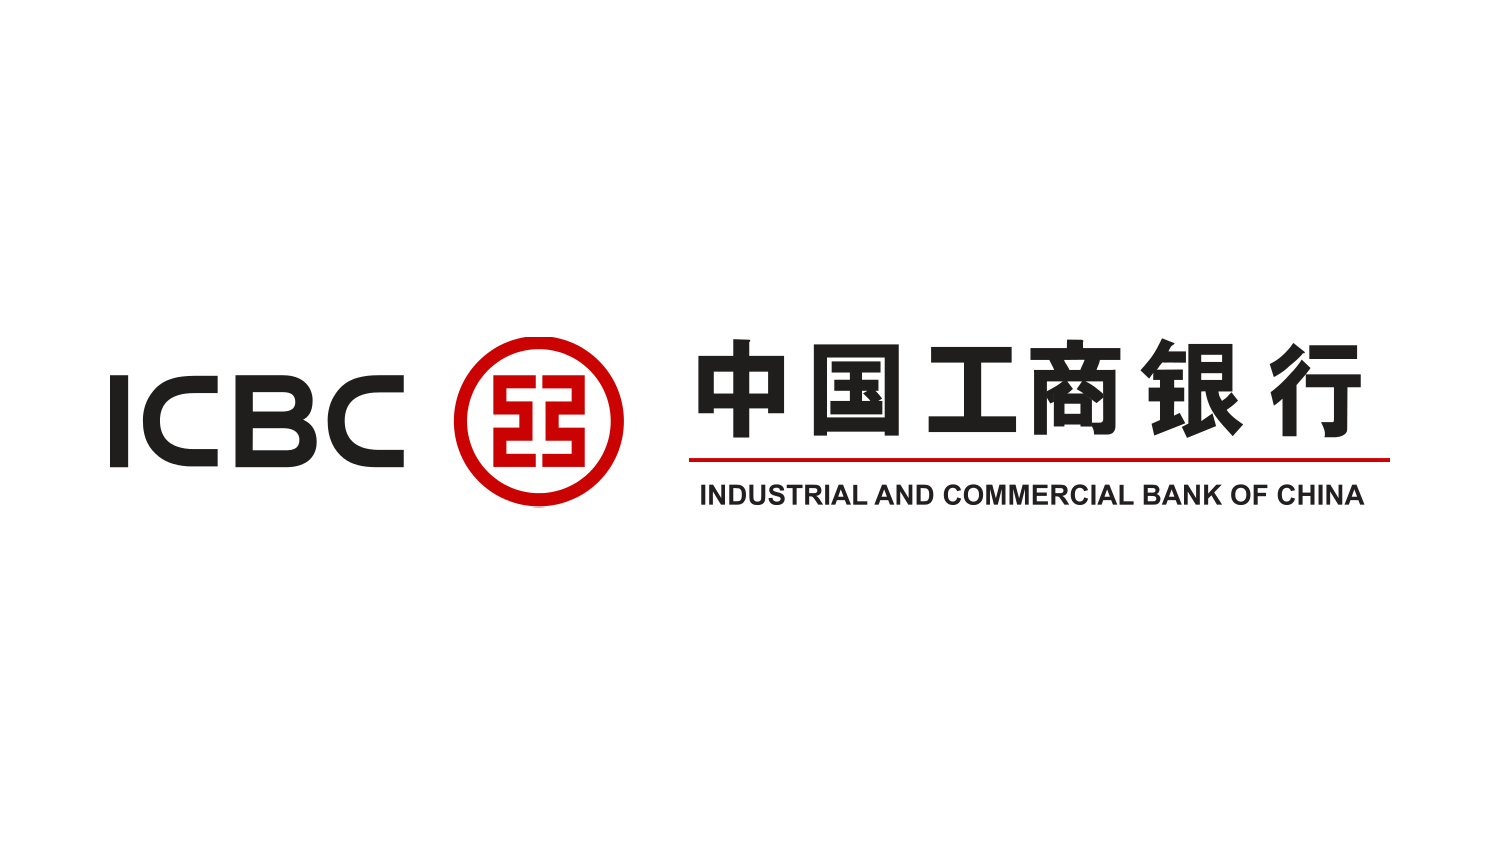 ICBC Logo